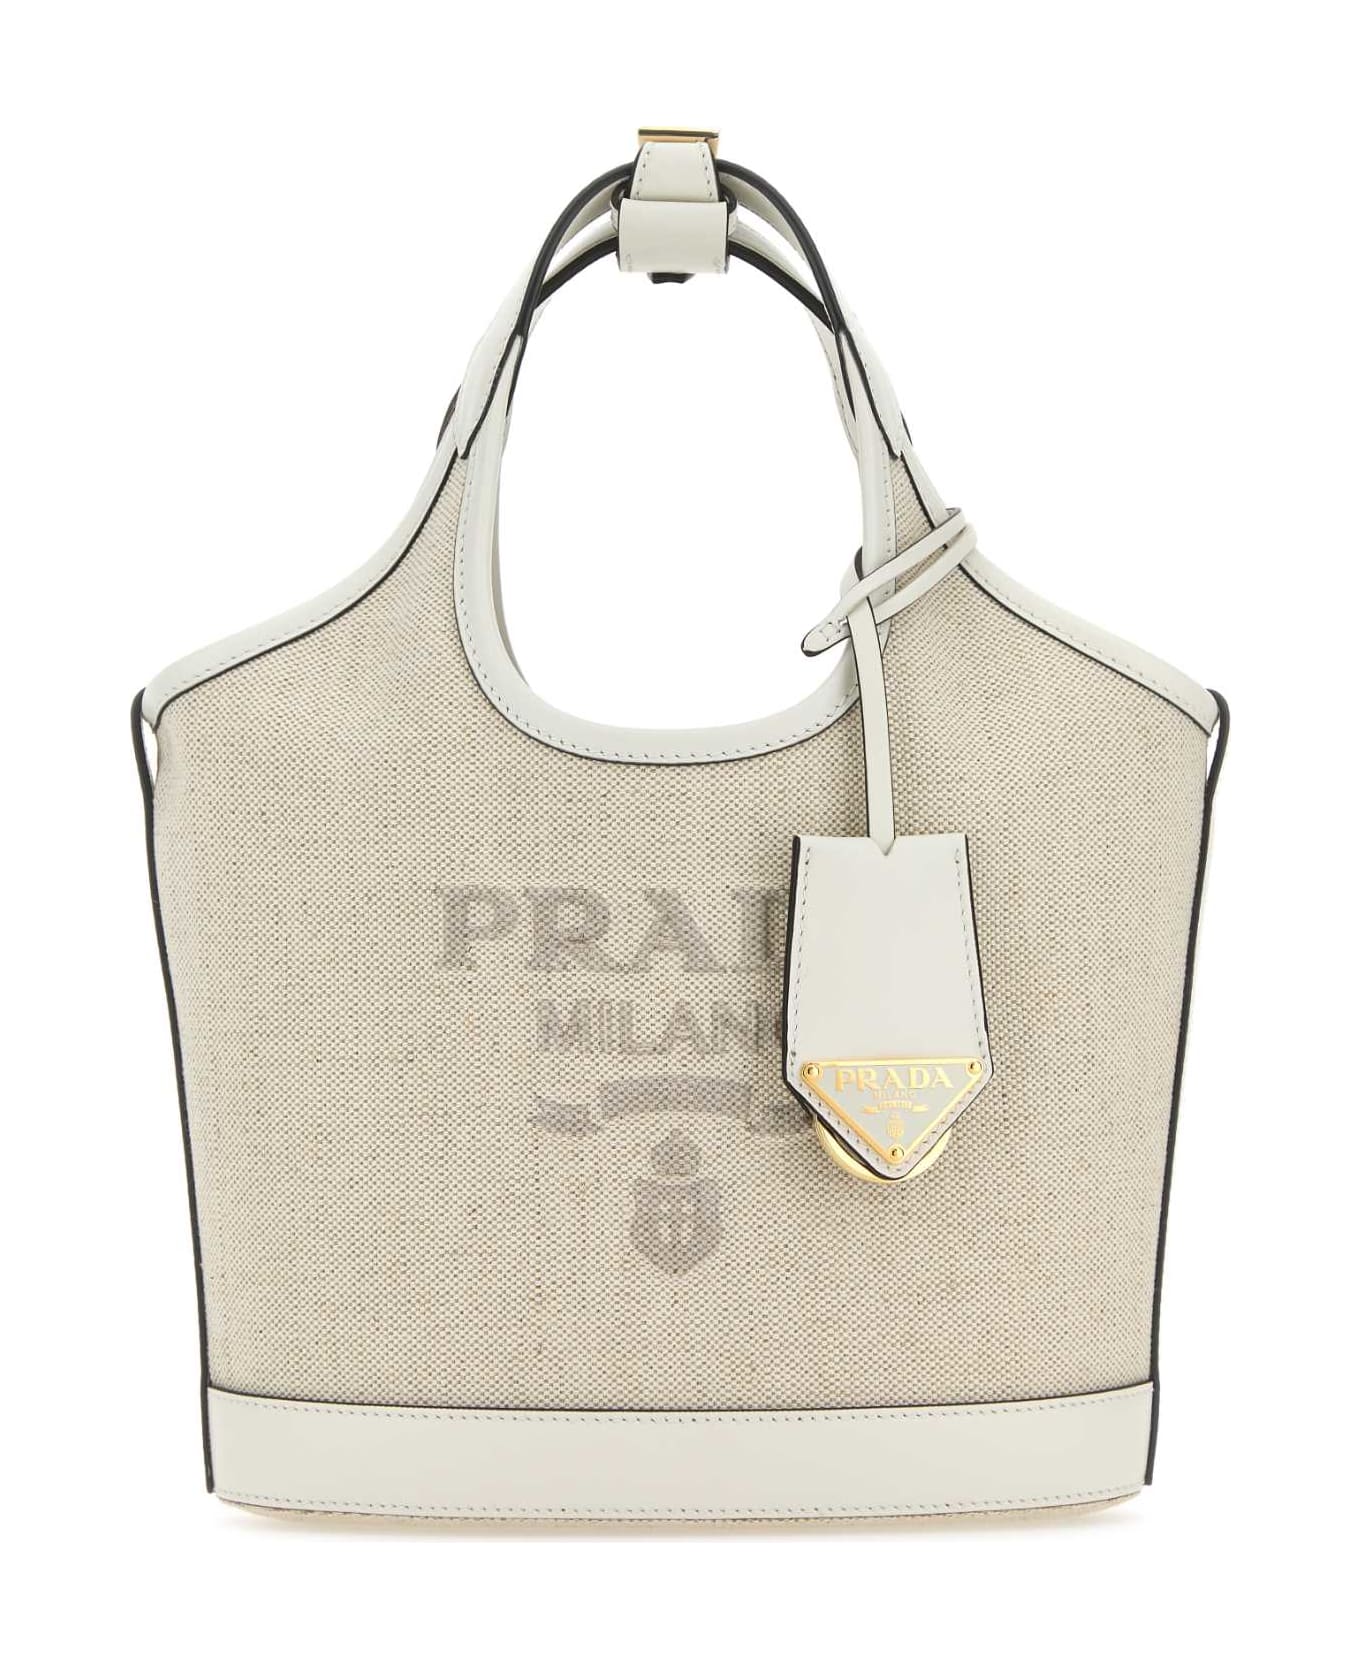 Prada Sand Canvas Handbag - NATURALEBIANCO